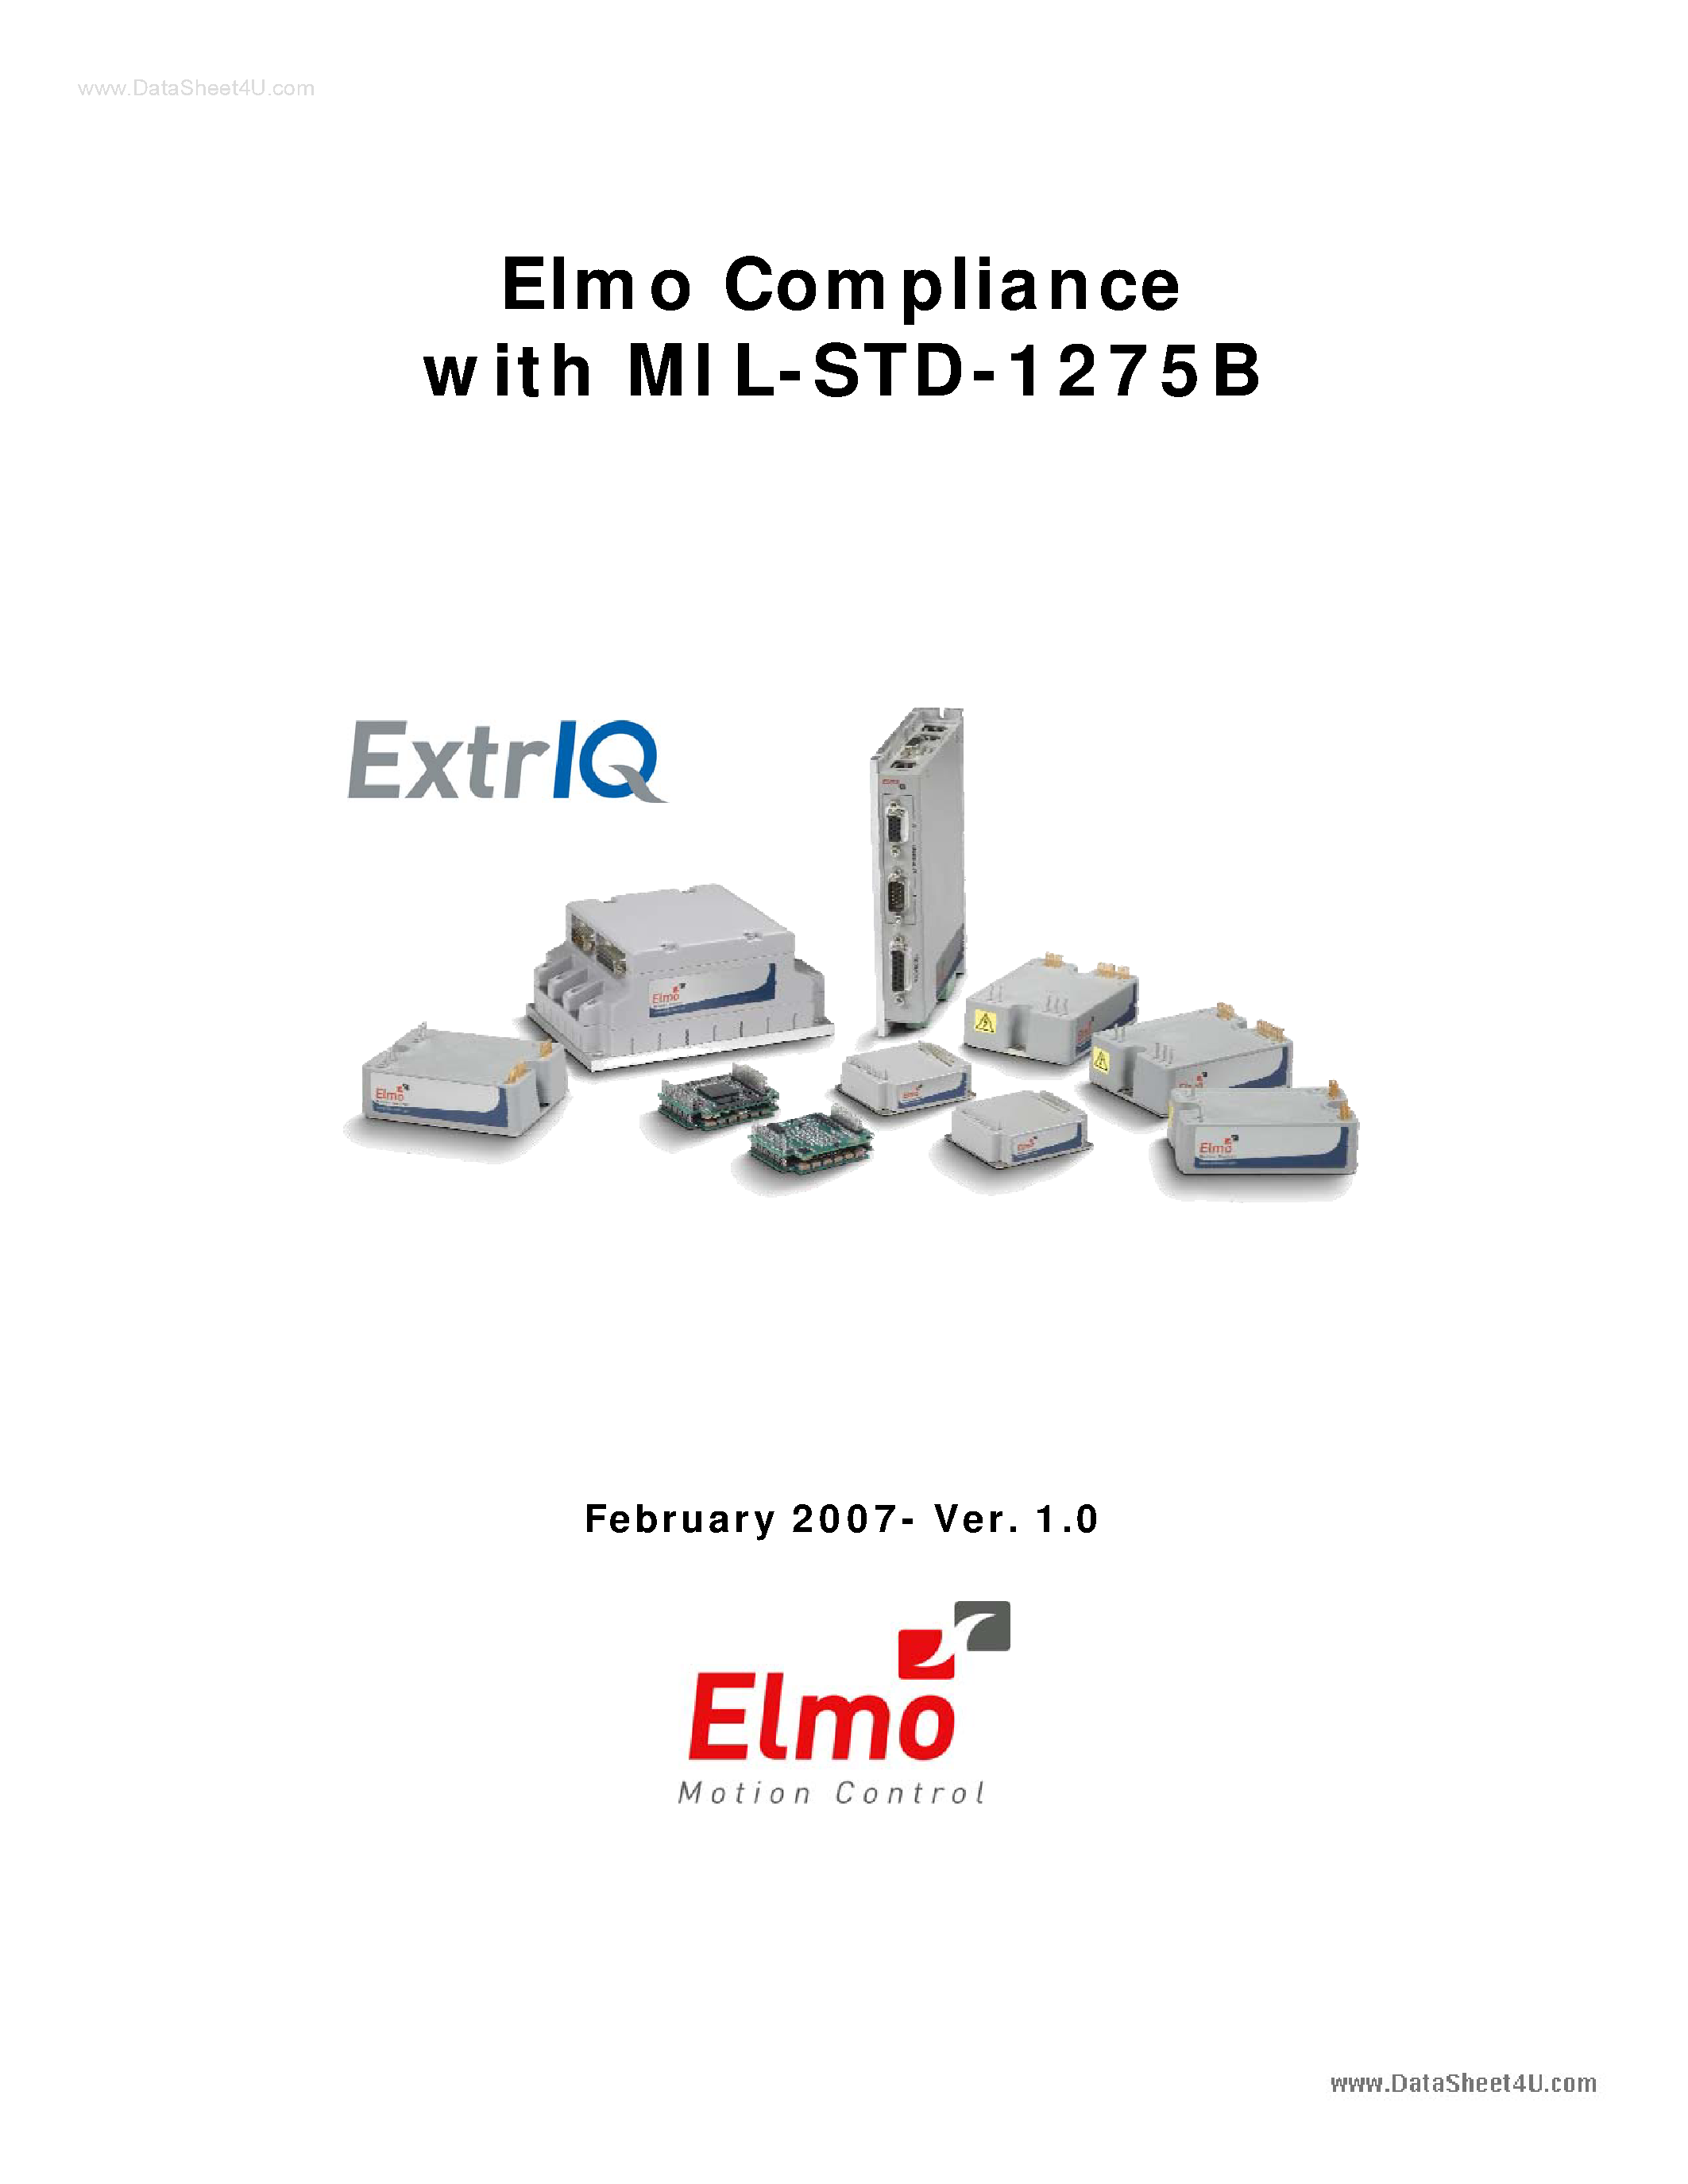 Даташит MIL-STD-1275B - Elmo Compliance страница 1